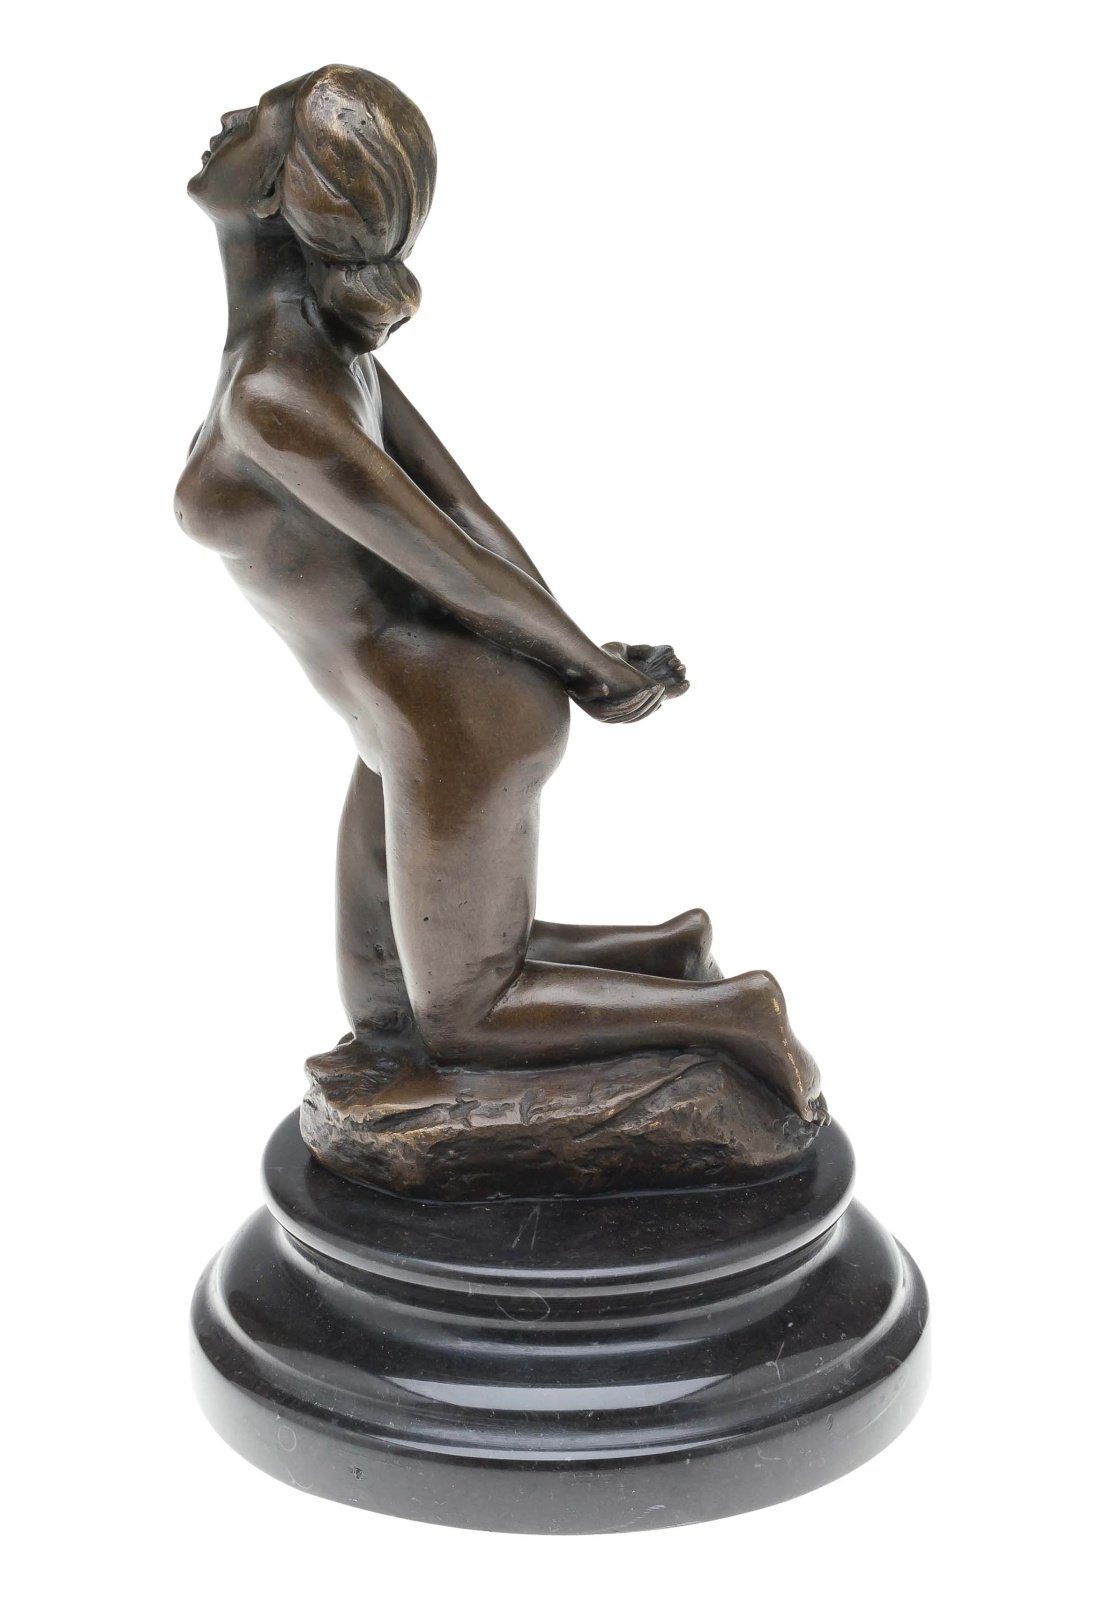 Antik-Stil kniende Erotik Figur Bronze Bronzeskulptur Skulptur Aubaho Bronzefigur Frau